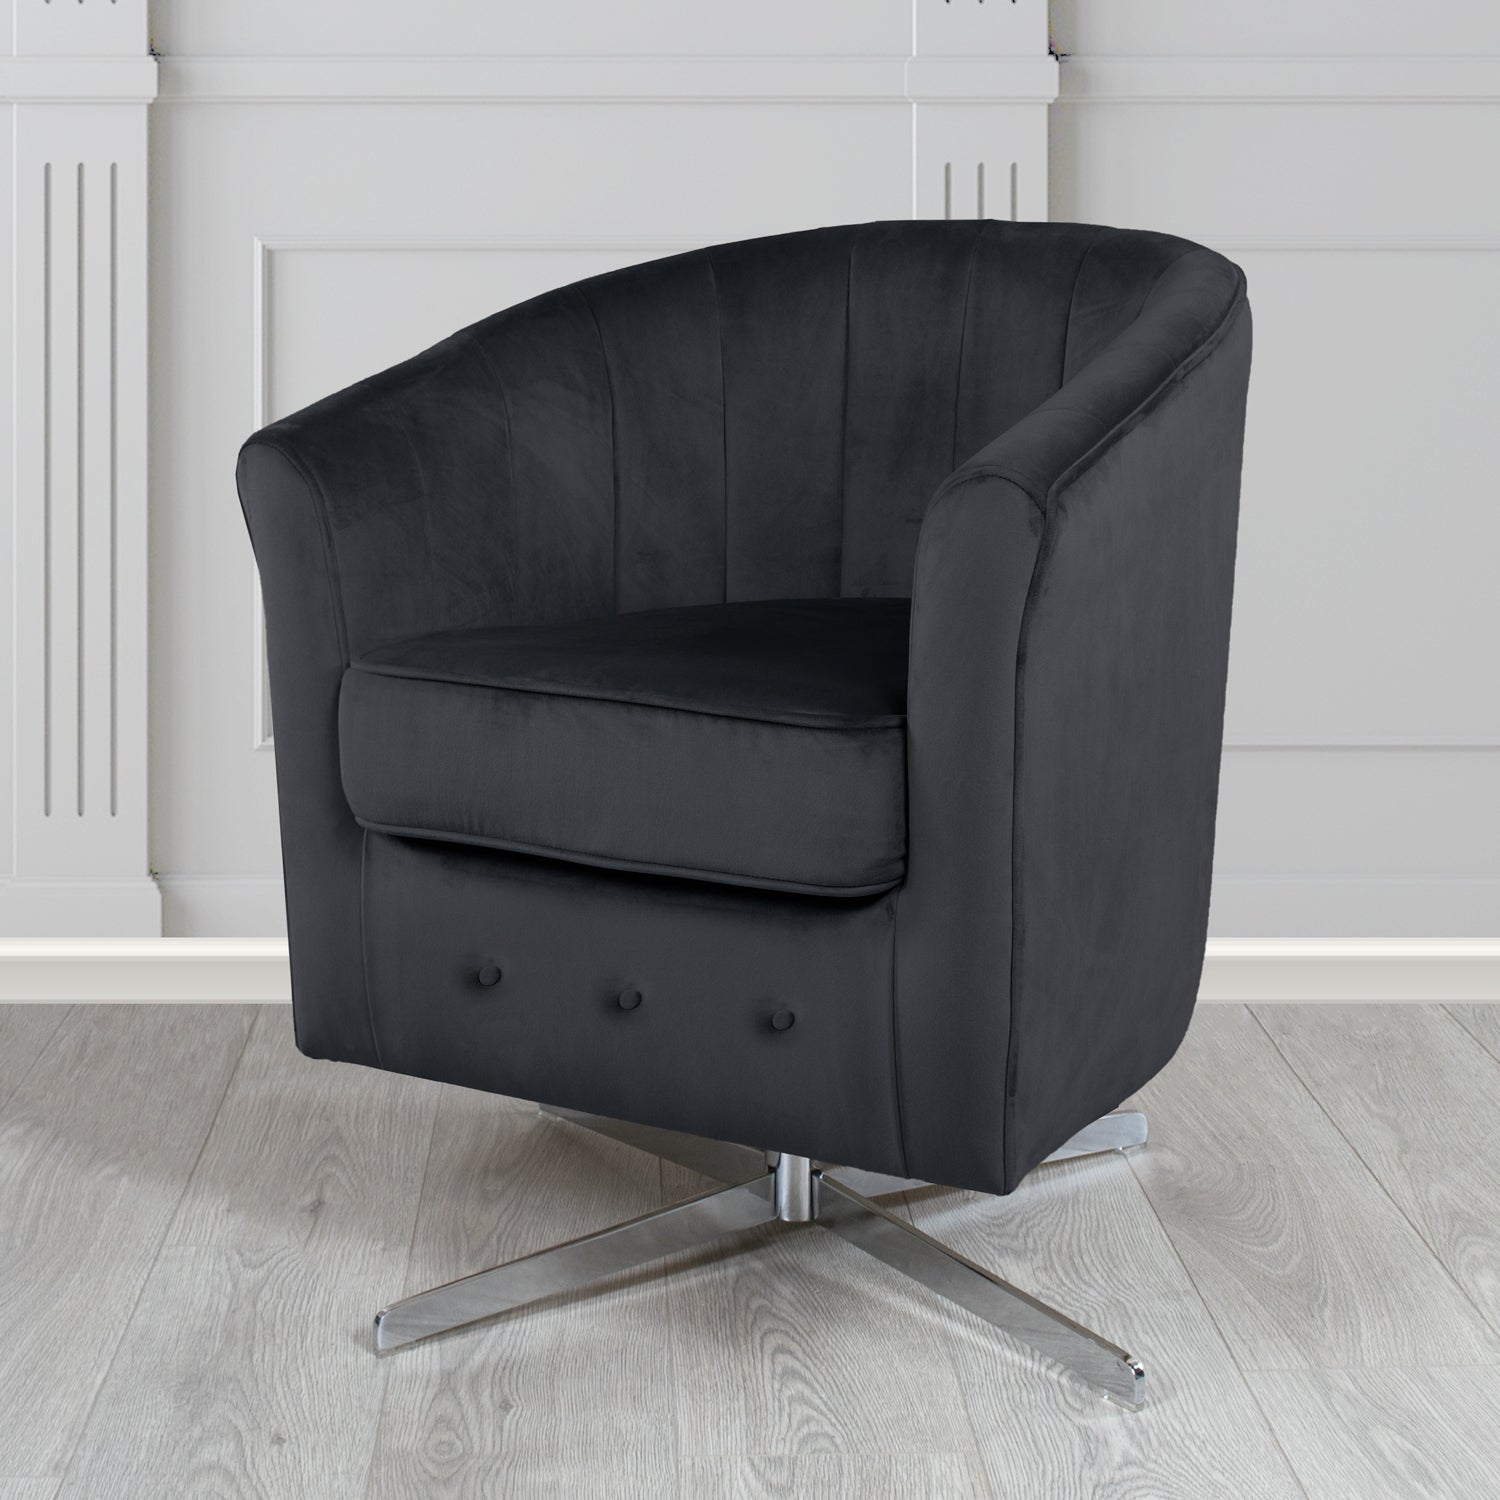 Doha Monaco Black Plain Velvet Fabric Swivel Tub Chair - The Tub Chair Shop